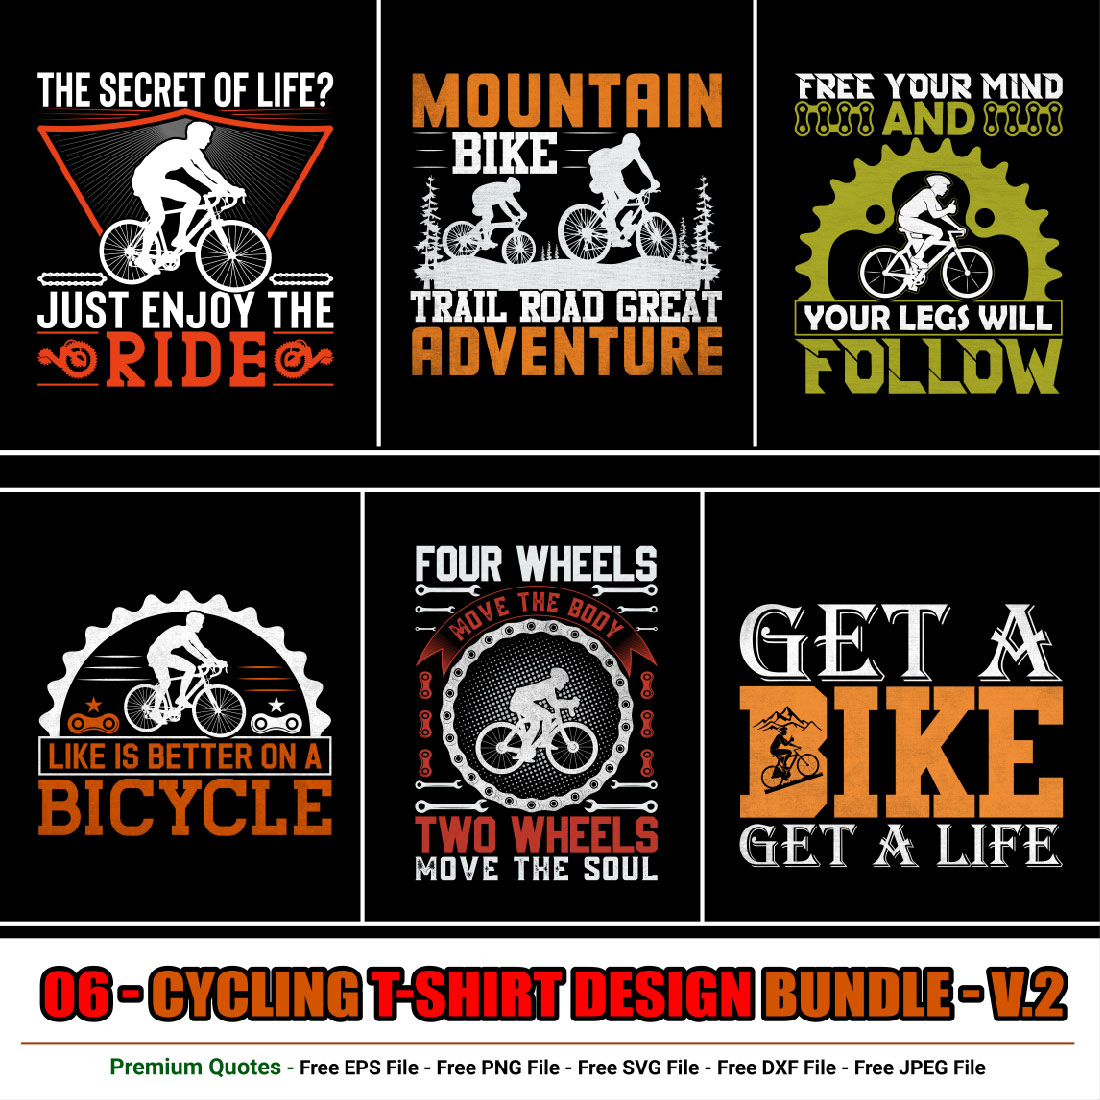 Cycling t-shirt design bundle cover image.